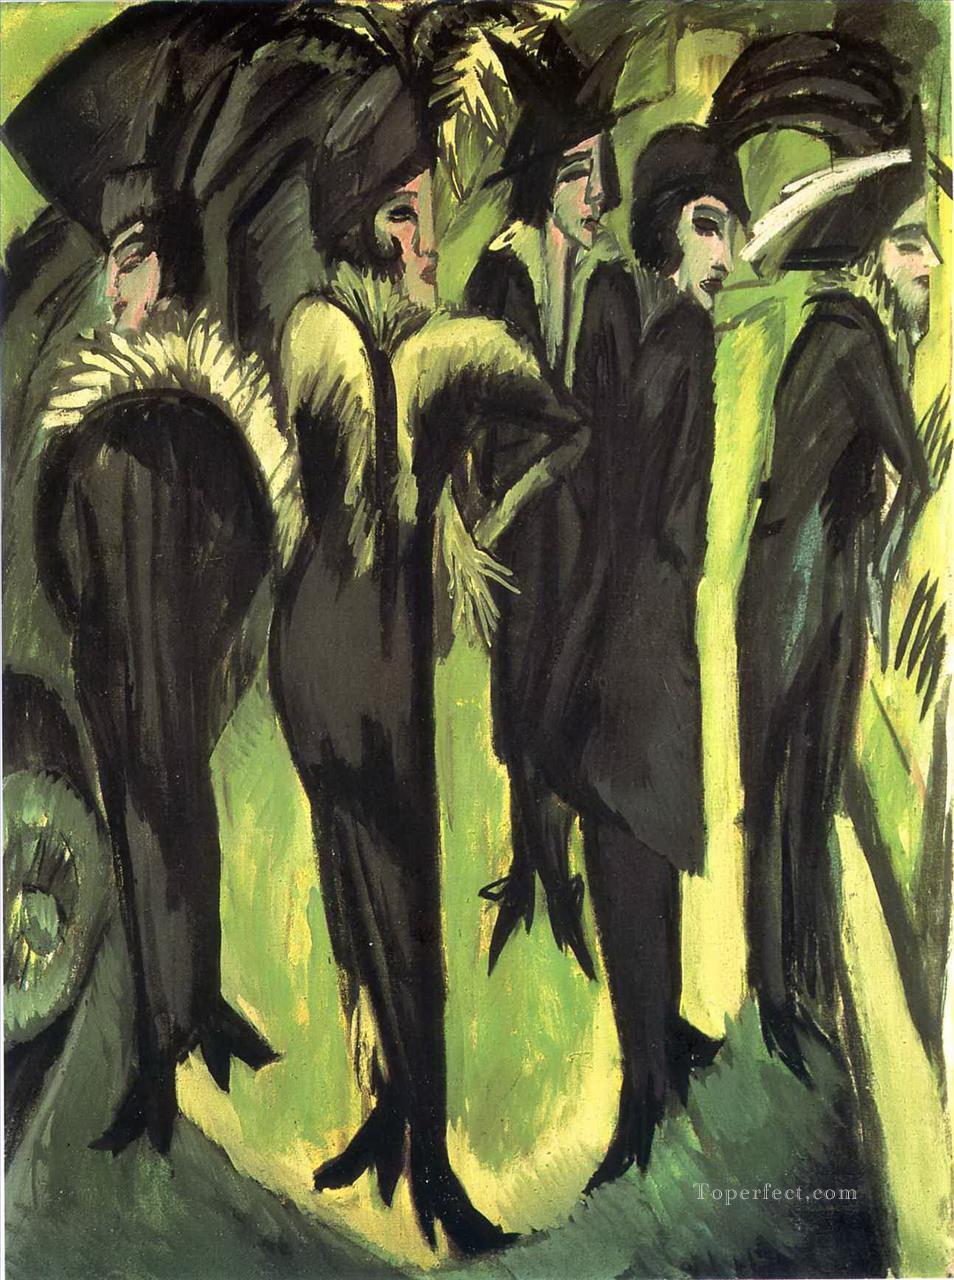 Ernst Ludwig Kirchner: Five Women on the Street